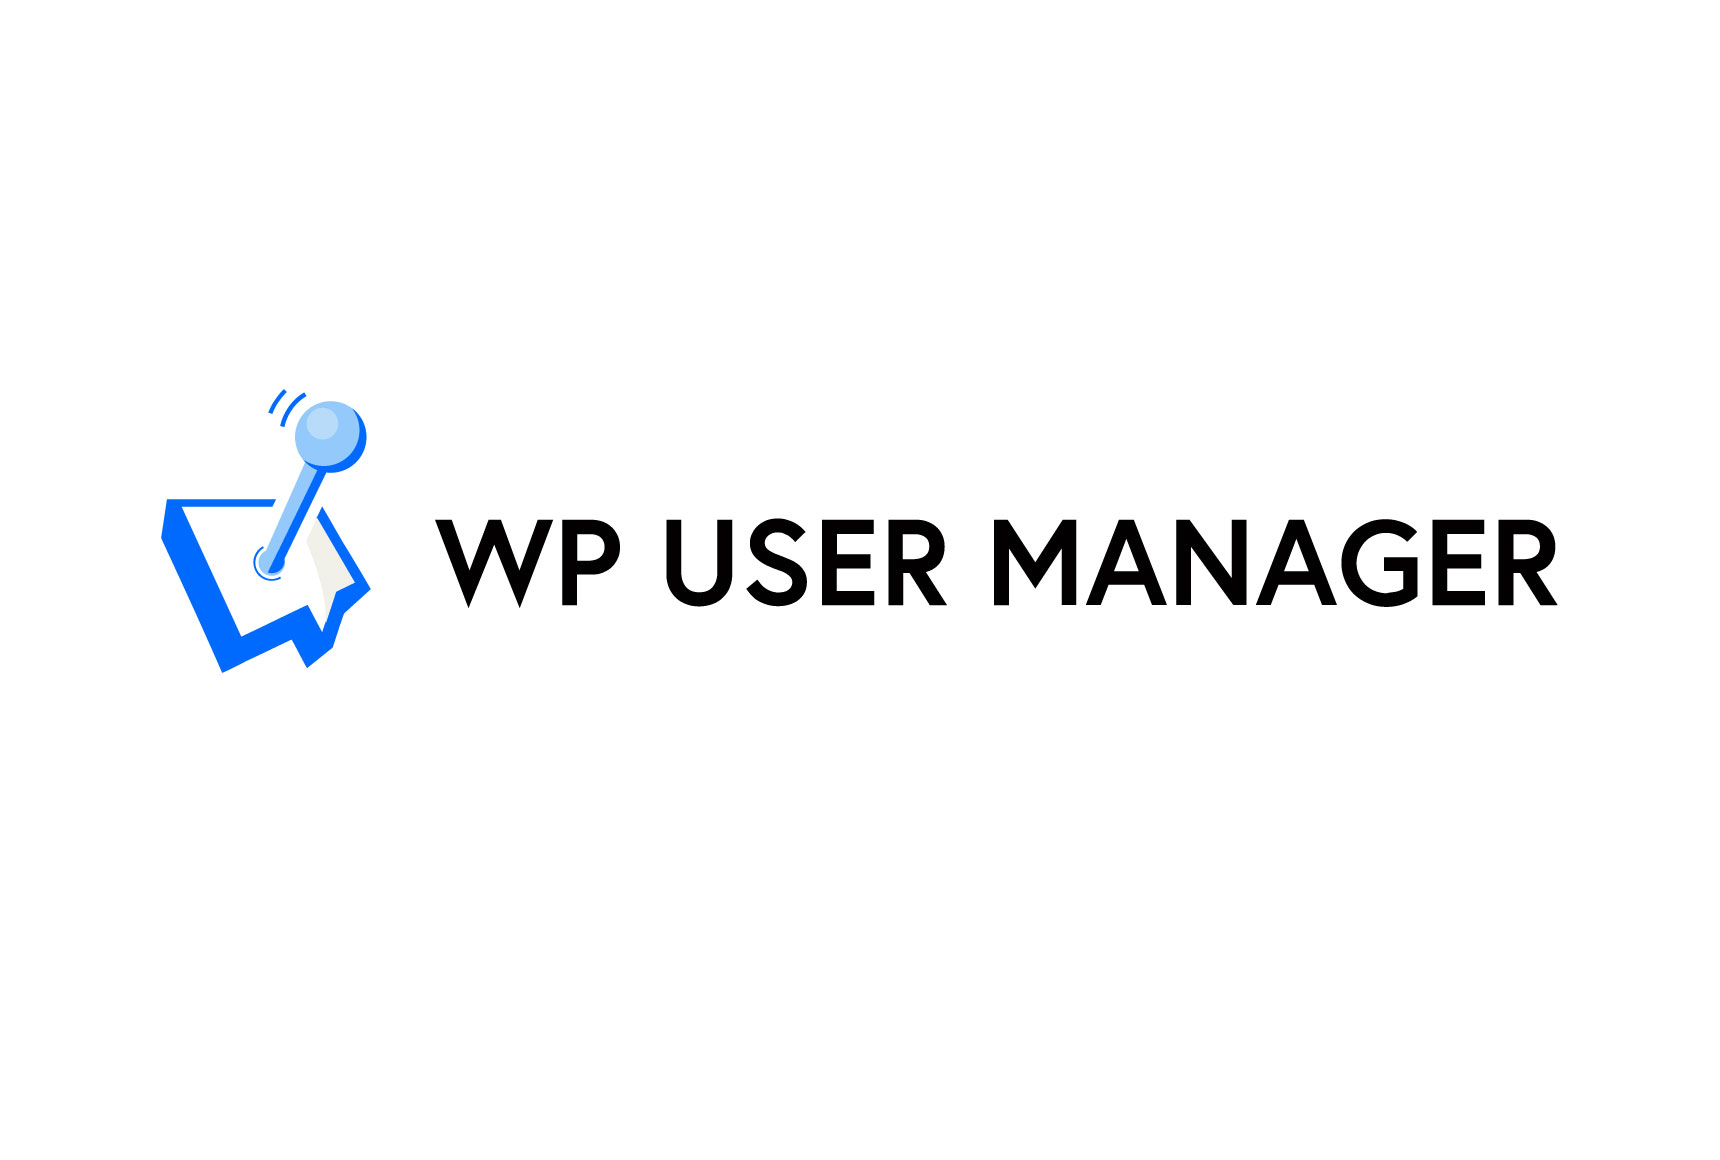 WP User Manager masthead image